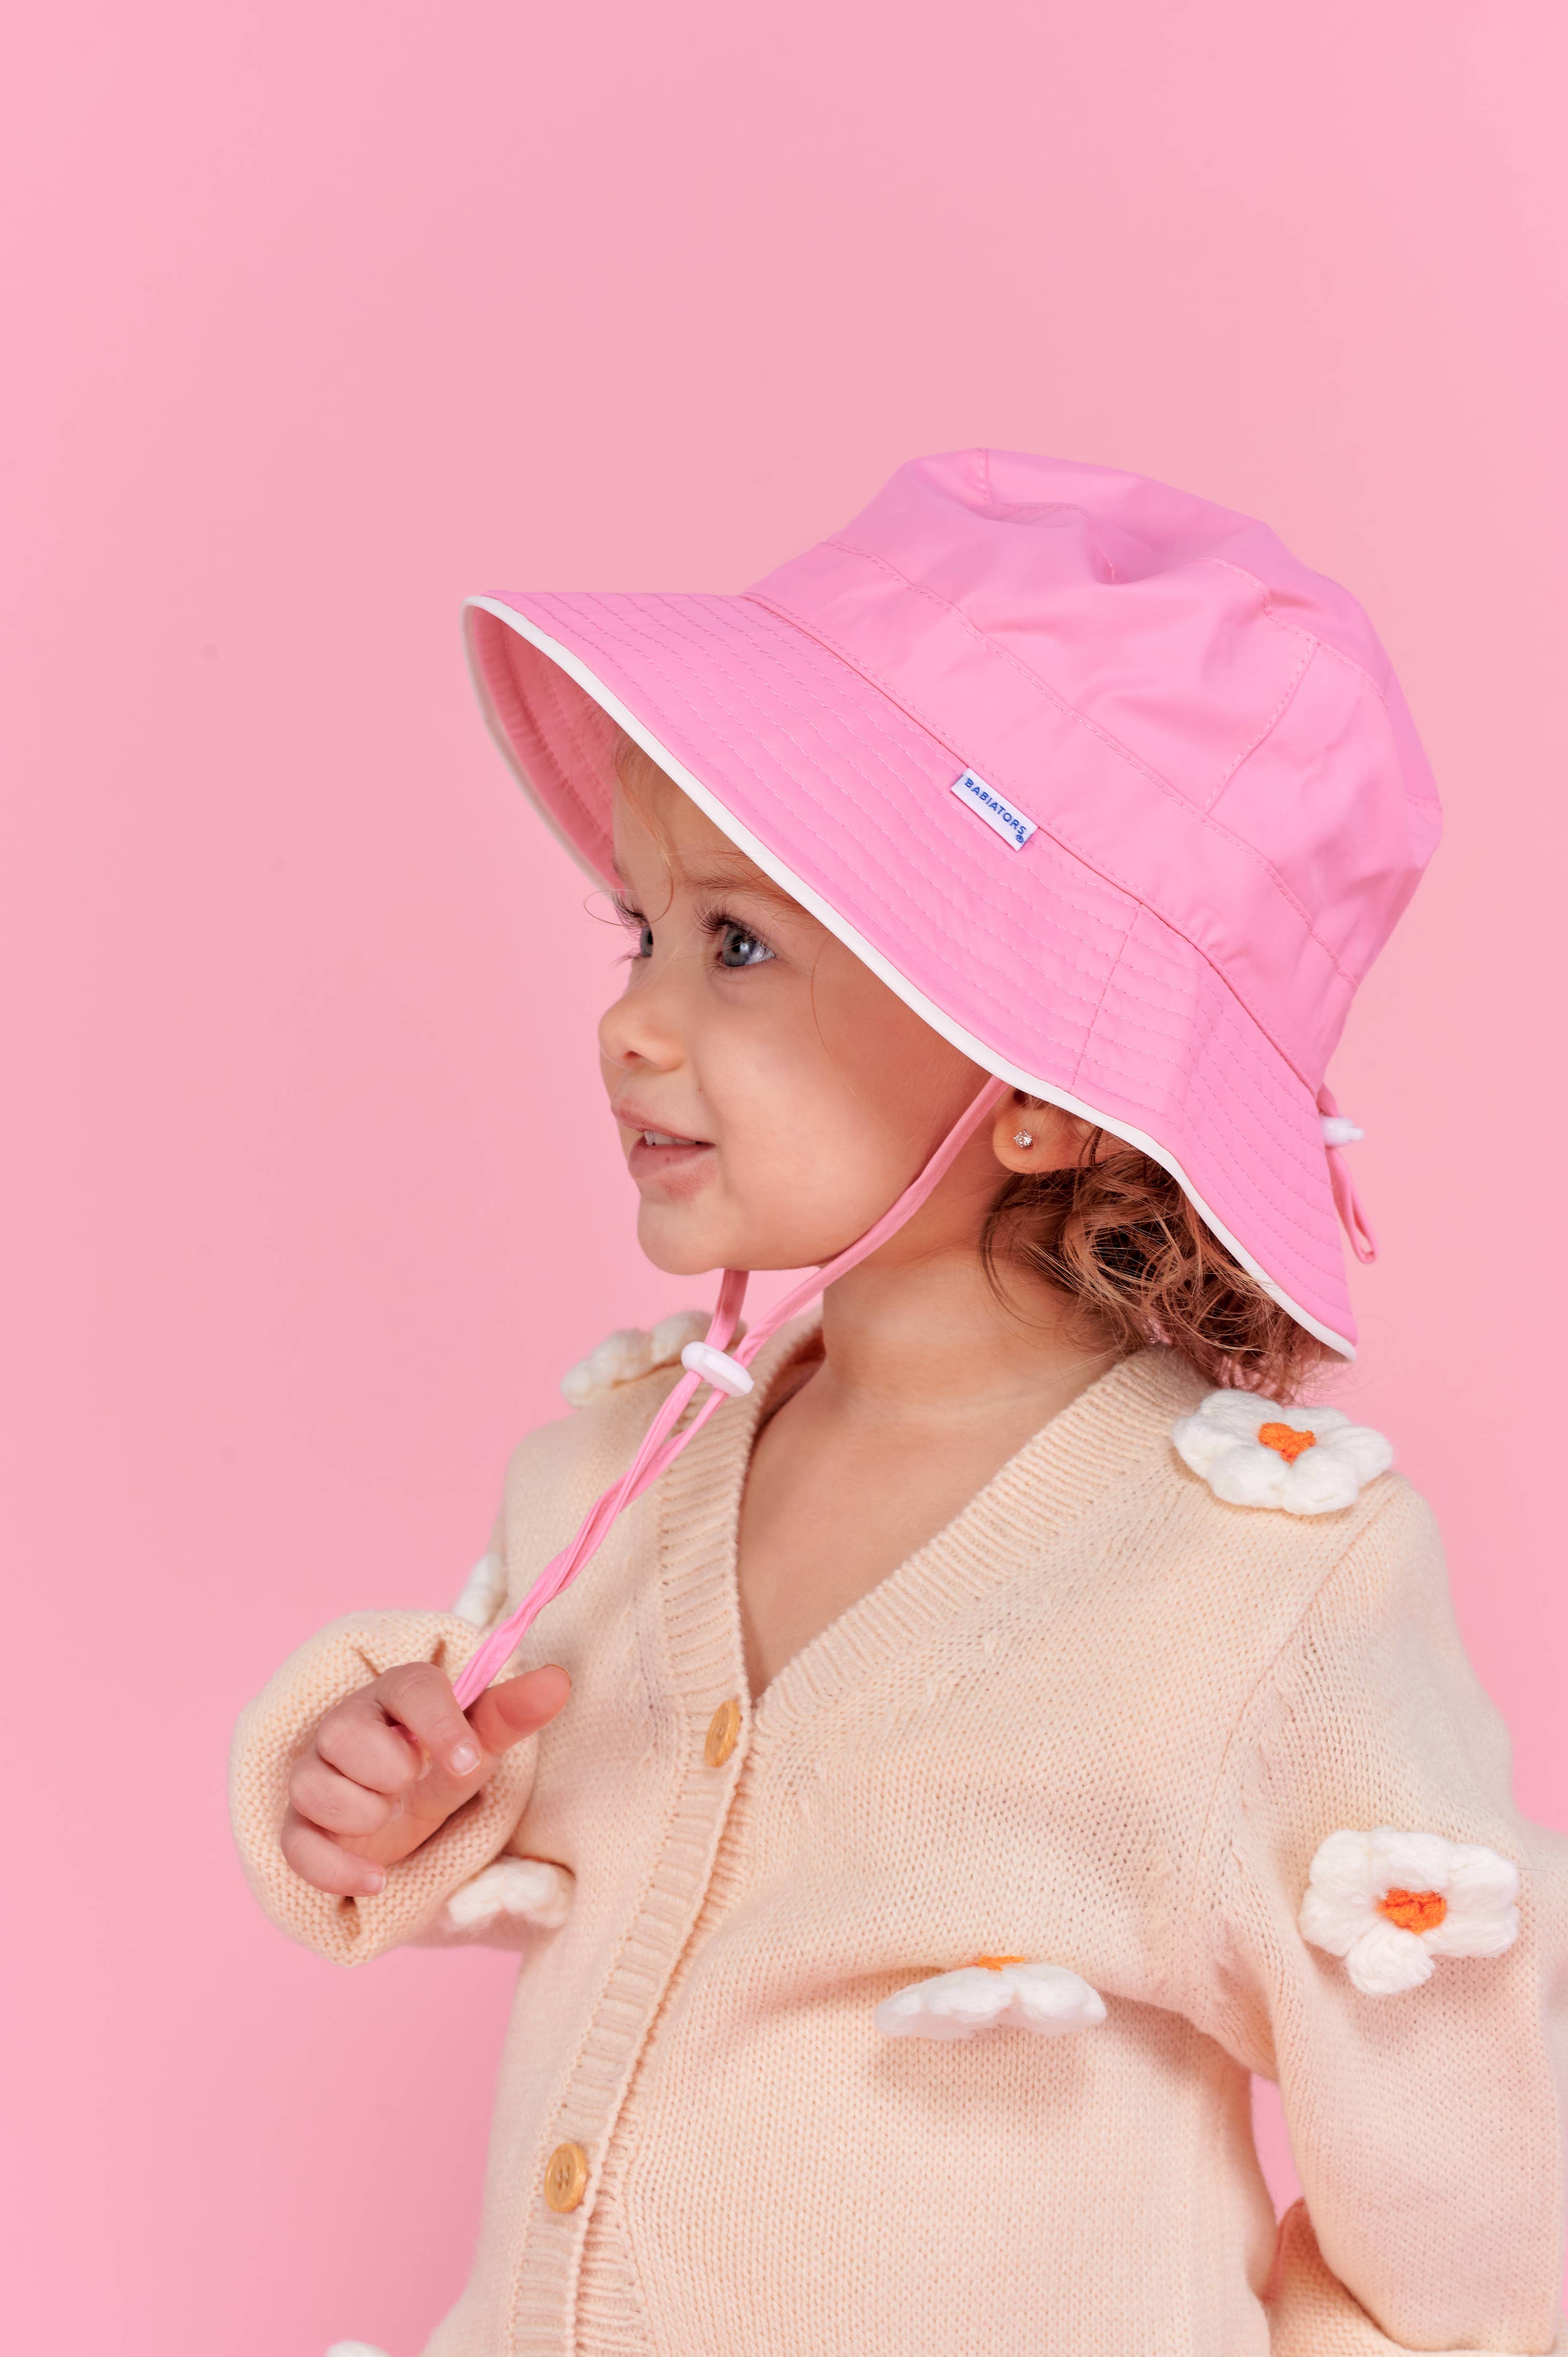 Babiators Sun Hat - Conch Shell Pink - Little Birdies